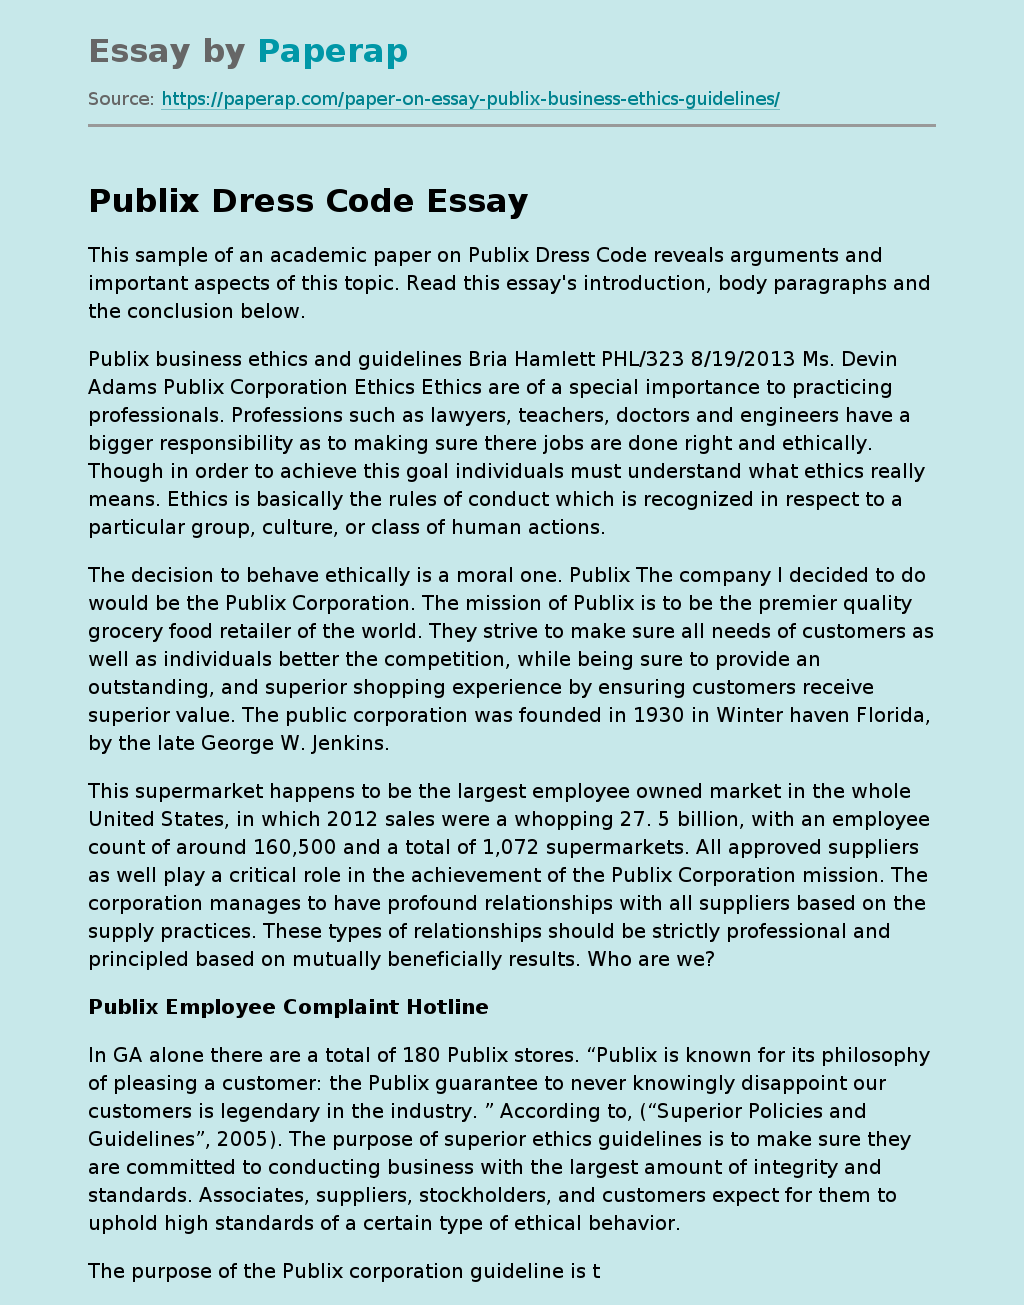 Publix Dress Code